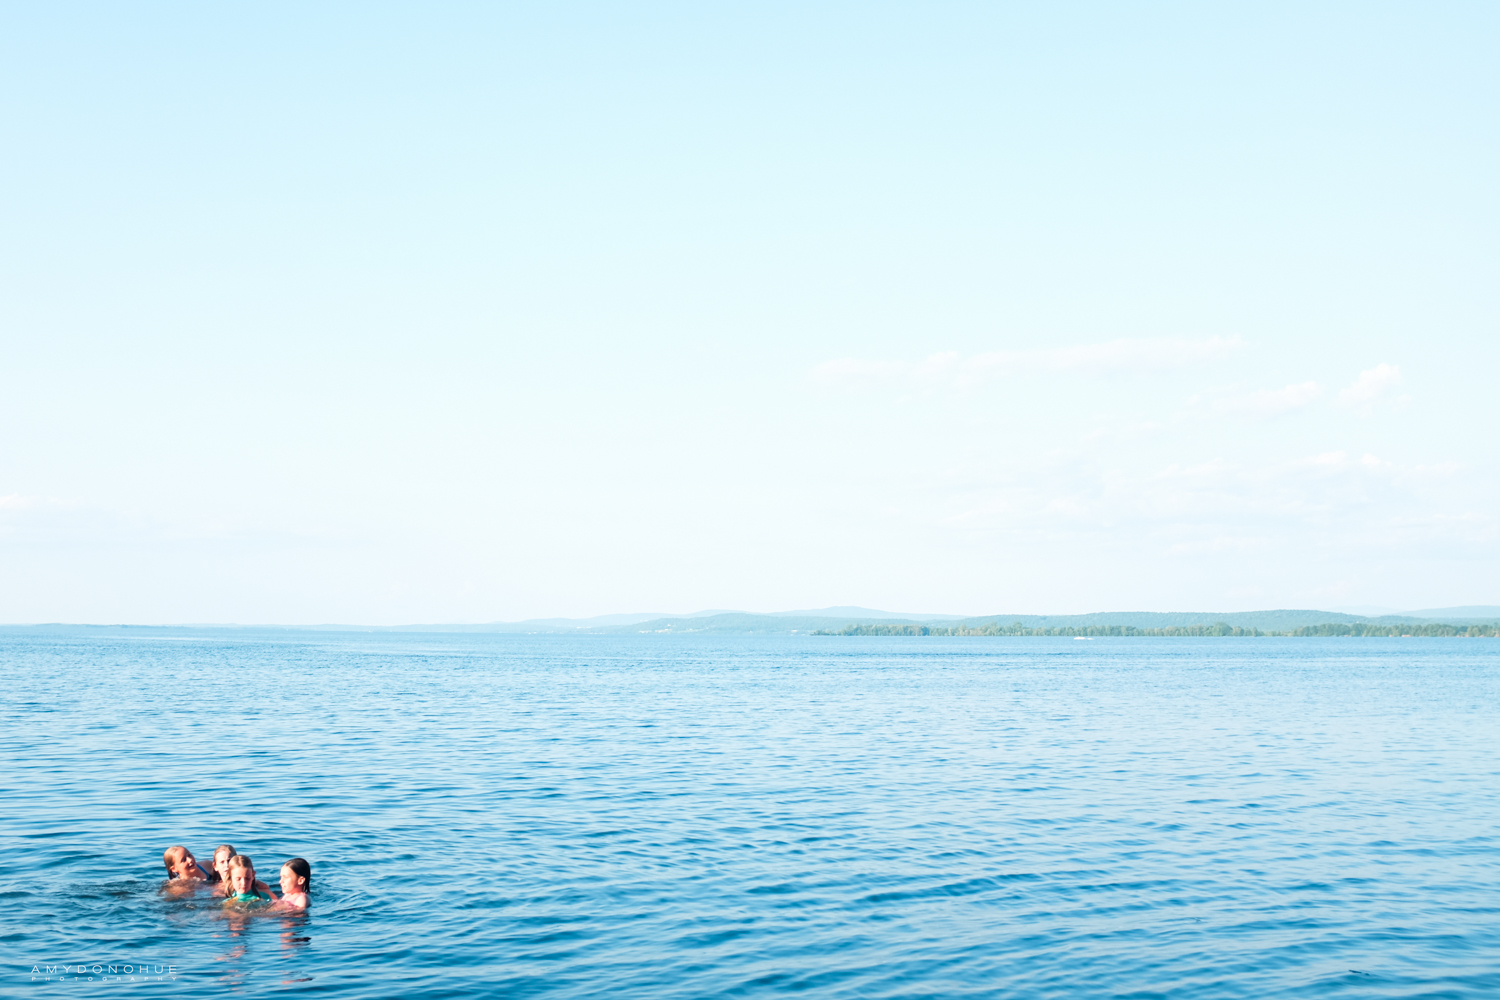 Lake Champlain | Amy Donohue Photography